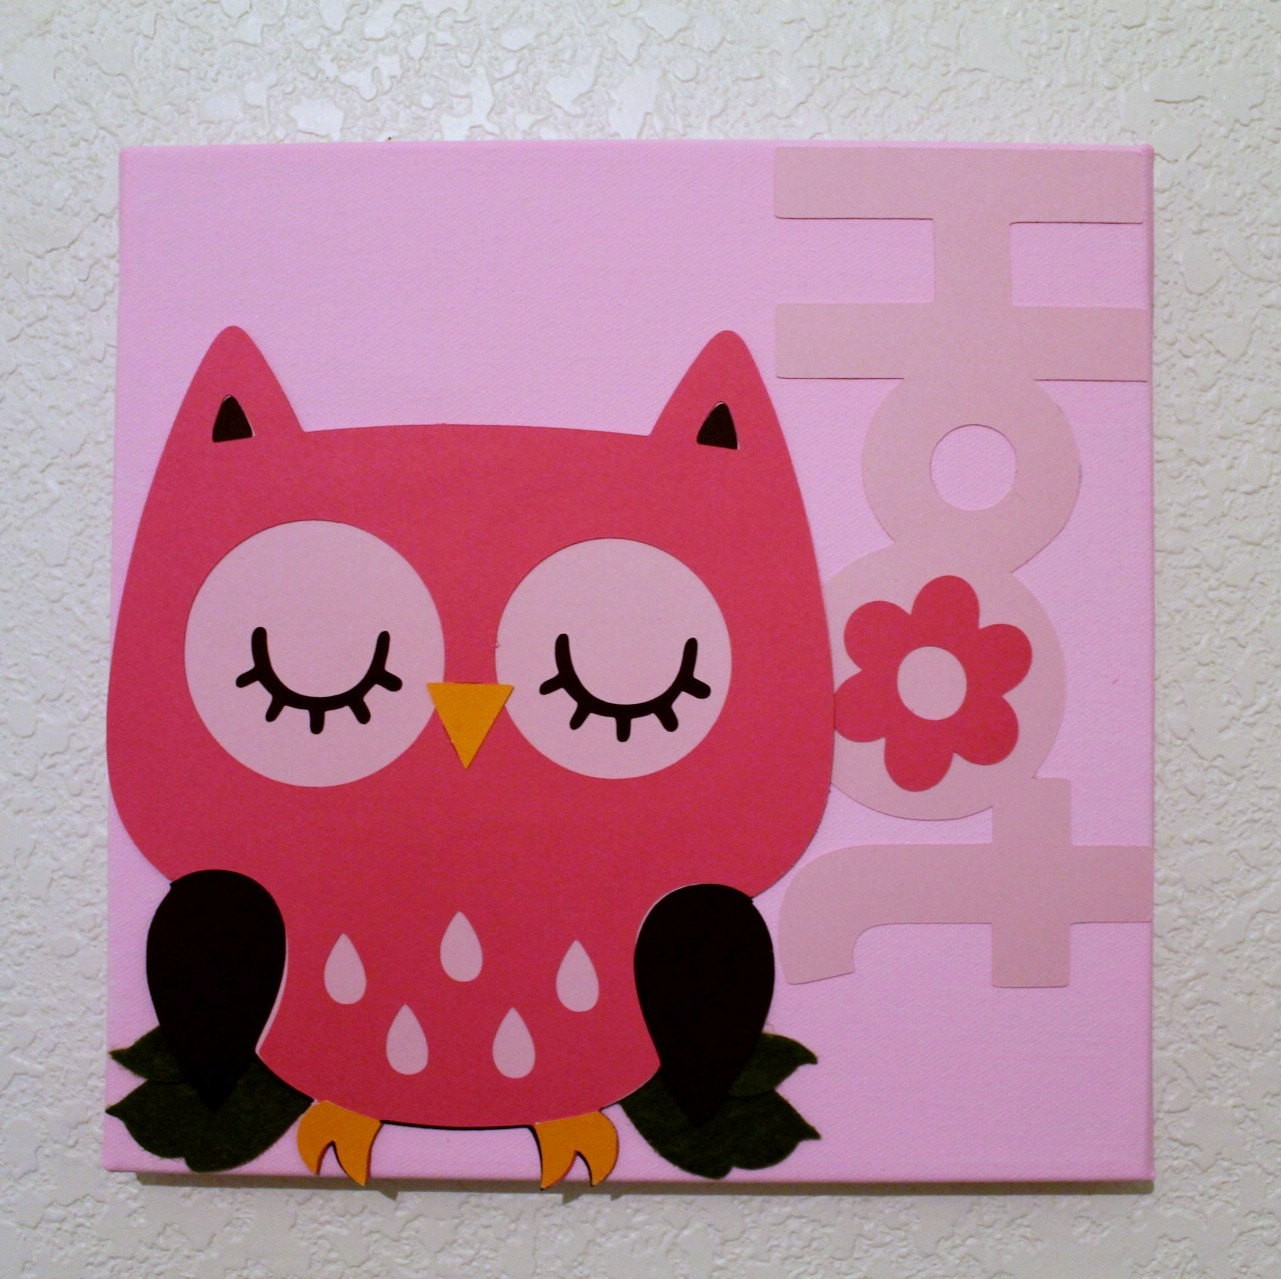 Owl Decor For Kids
 Wall Decor Pink Owl Baby Nursery Kids Children Room Decor